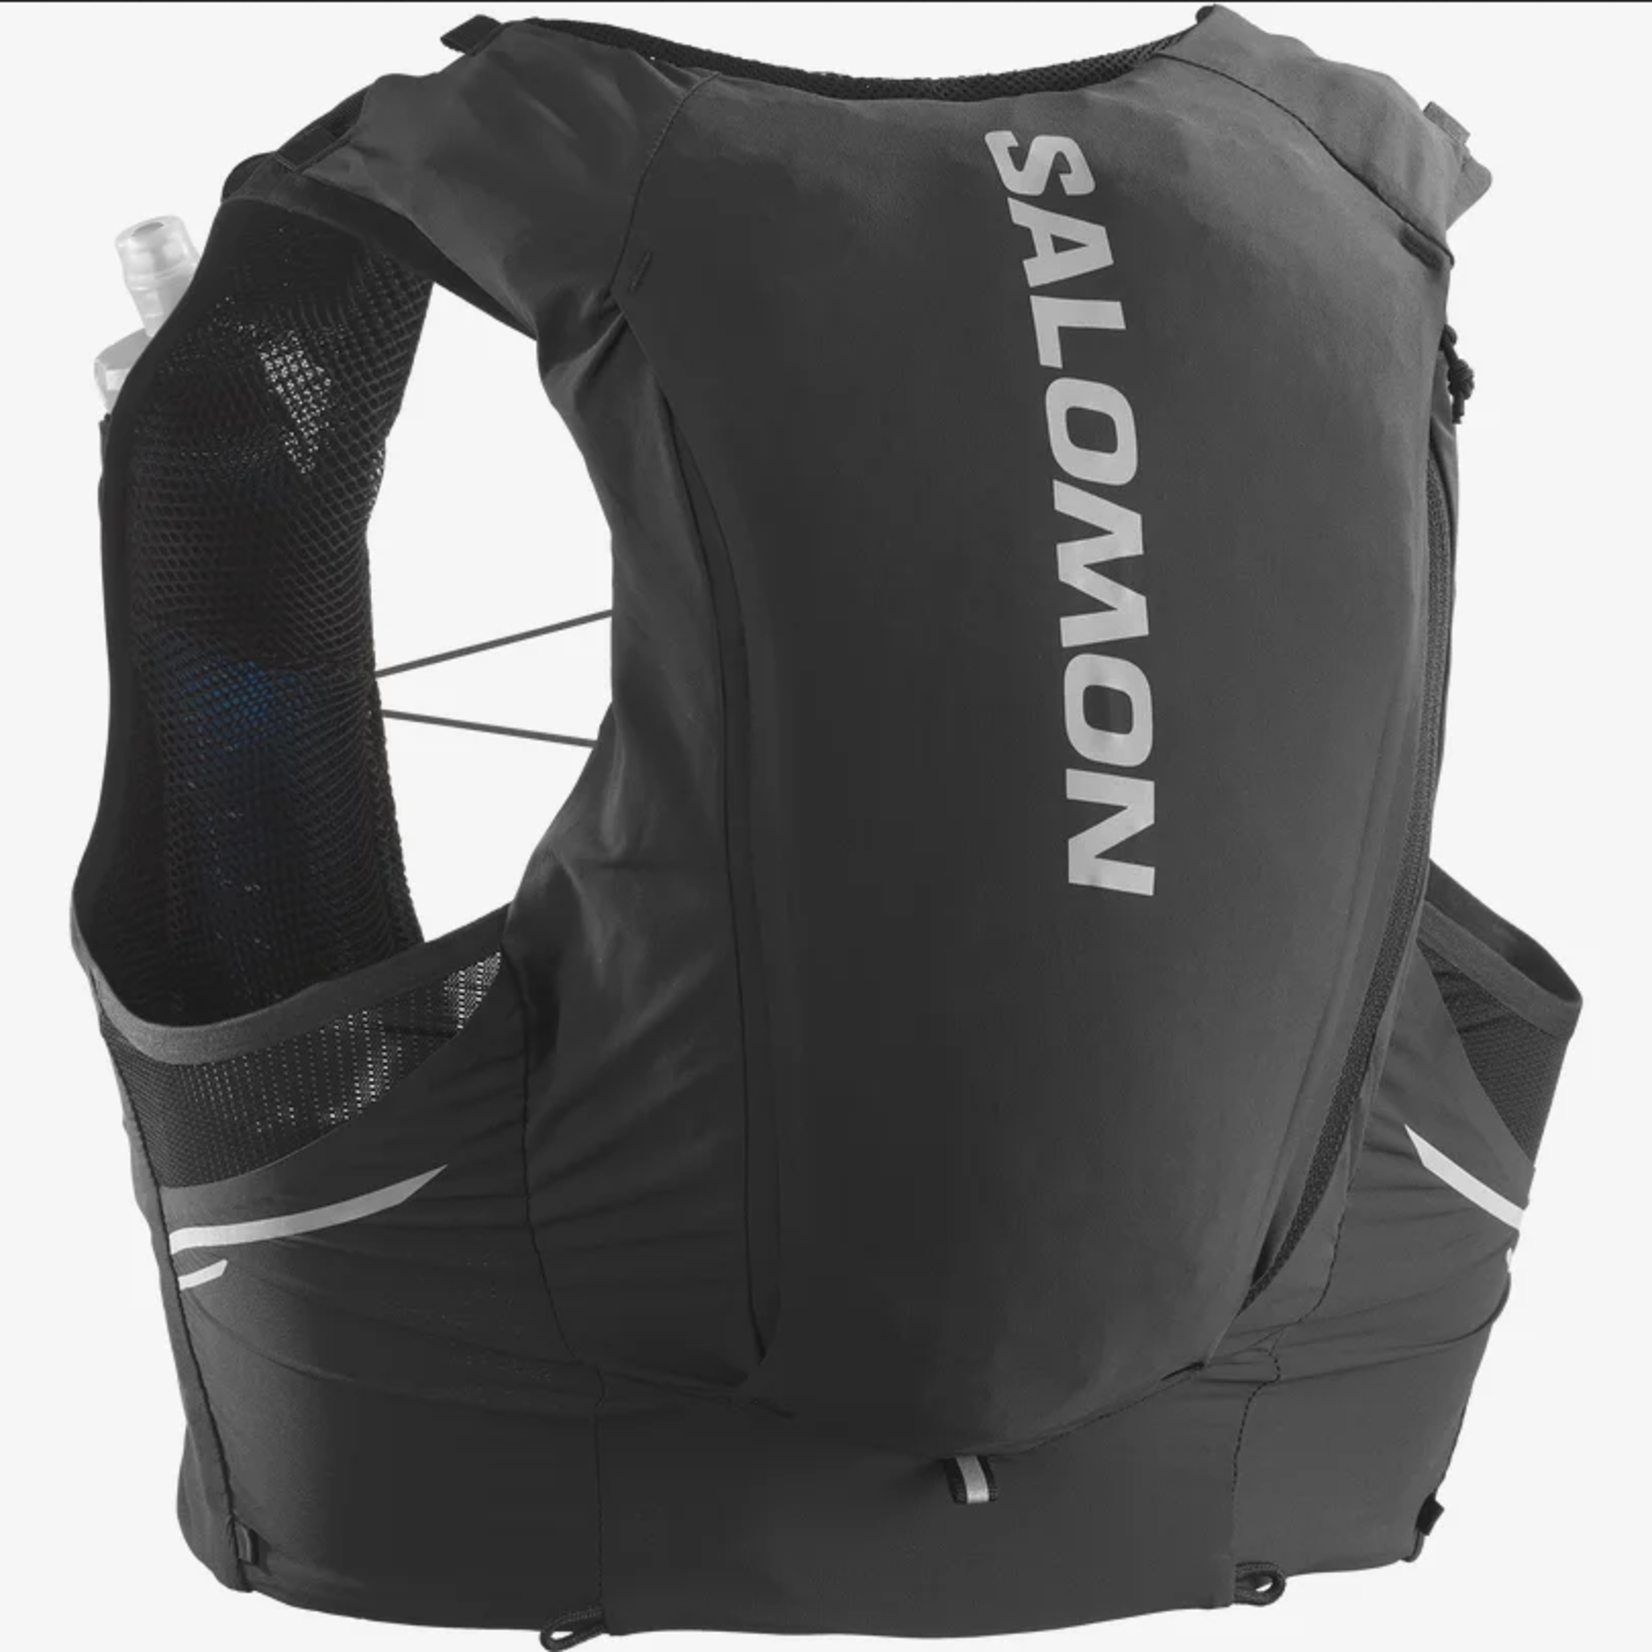 Salomon Sense Pro 10 - Distance Runwear